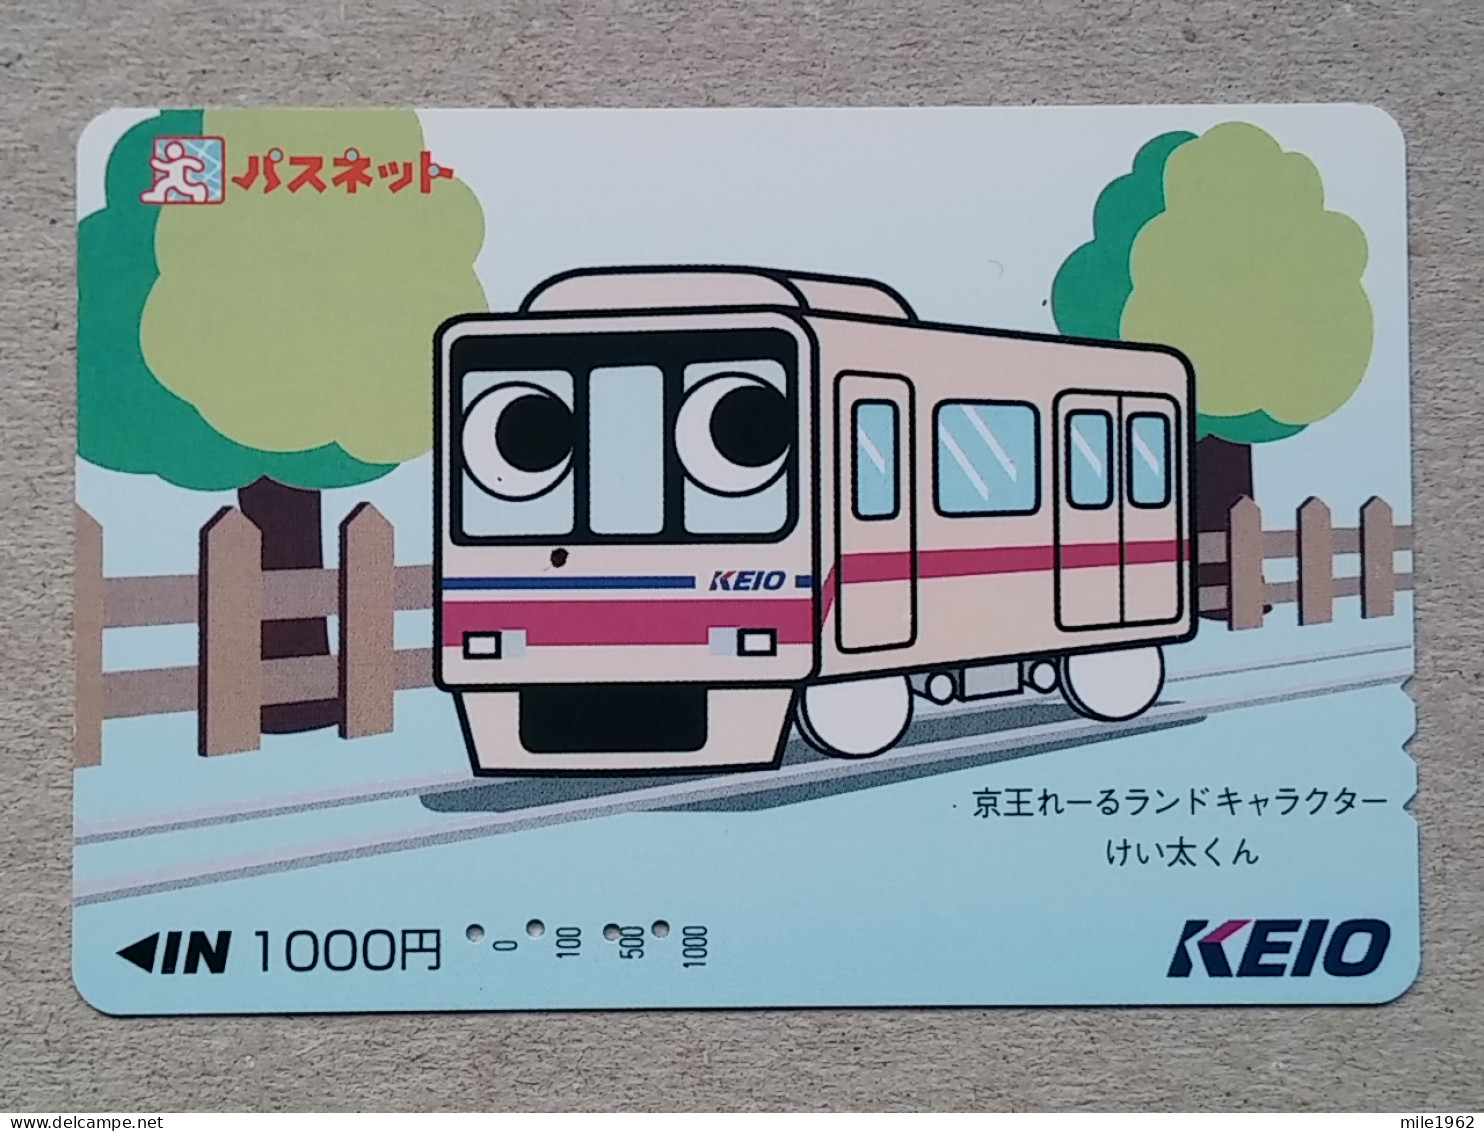 T-201- JAPAN, Japon, Nipon, Carte Prepayee, Prepaid Card, Bus, Autobus - Auto's